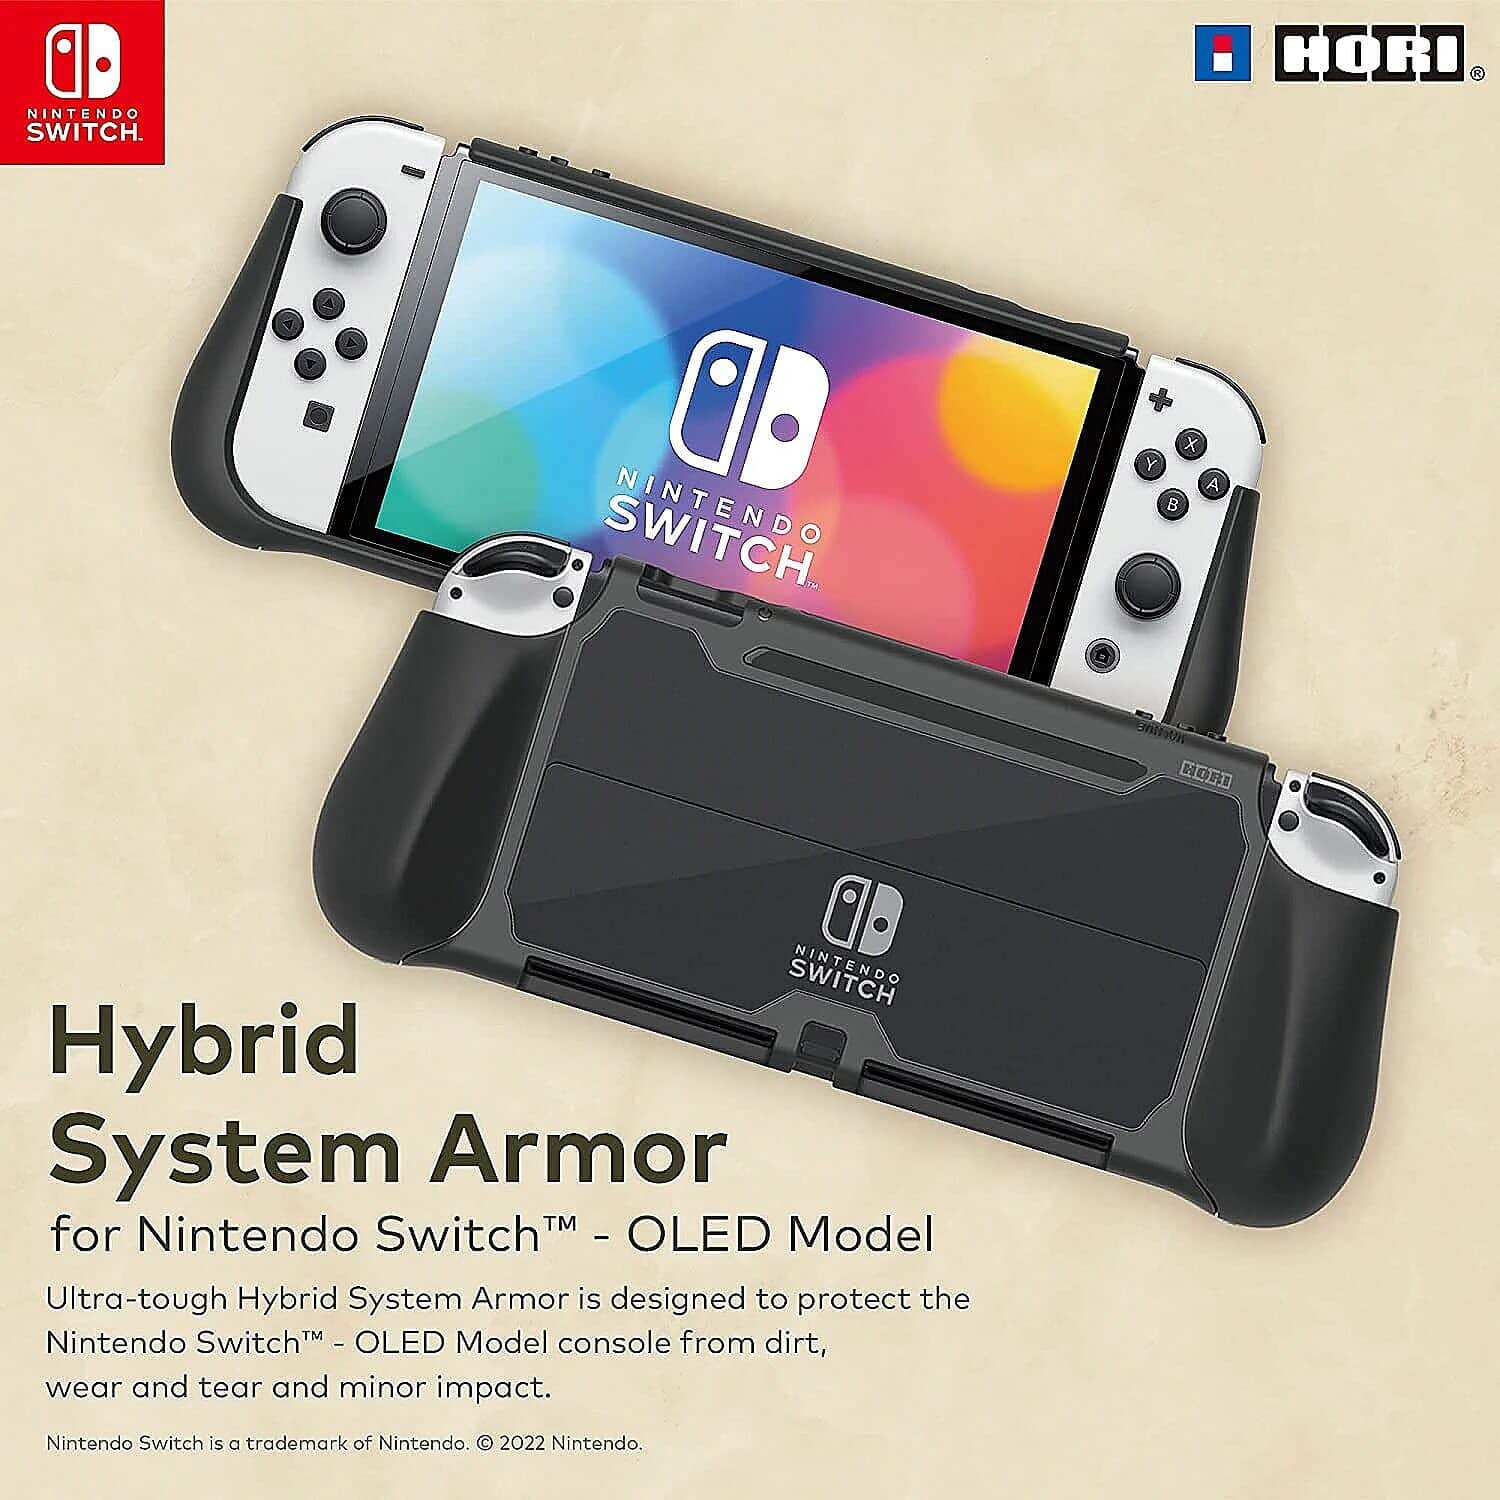 HORI Hybrid System Armor Lifestyle Image